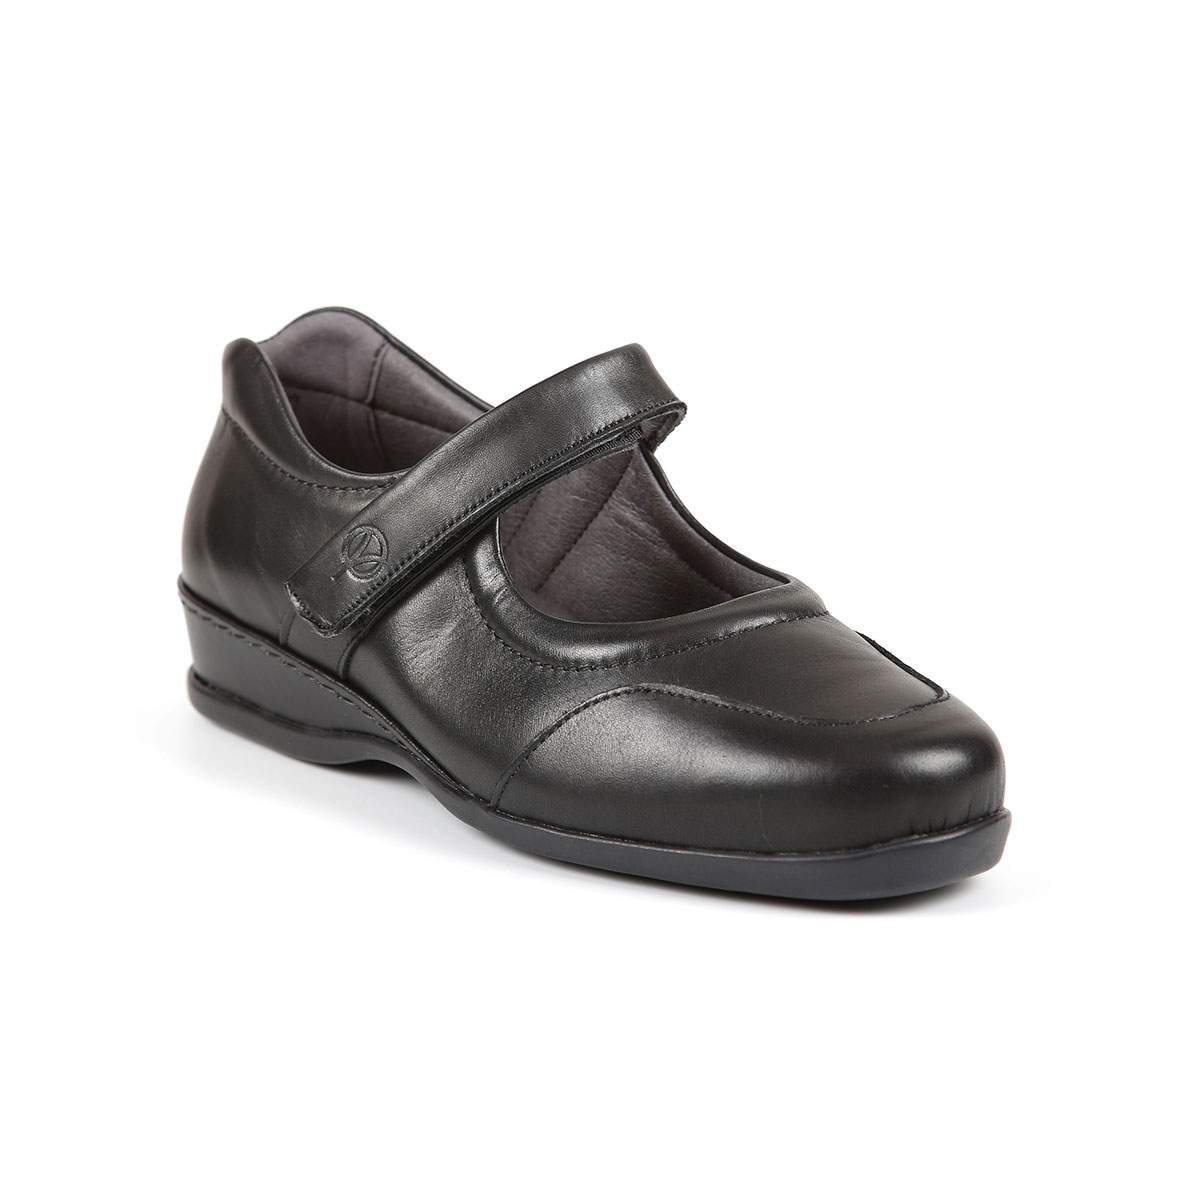 Black Welton shoe